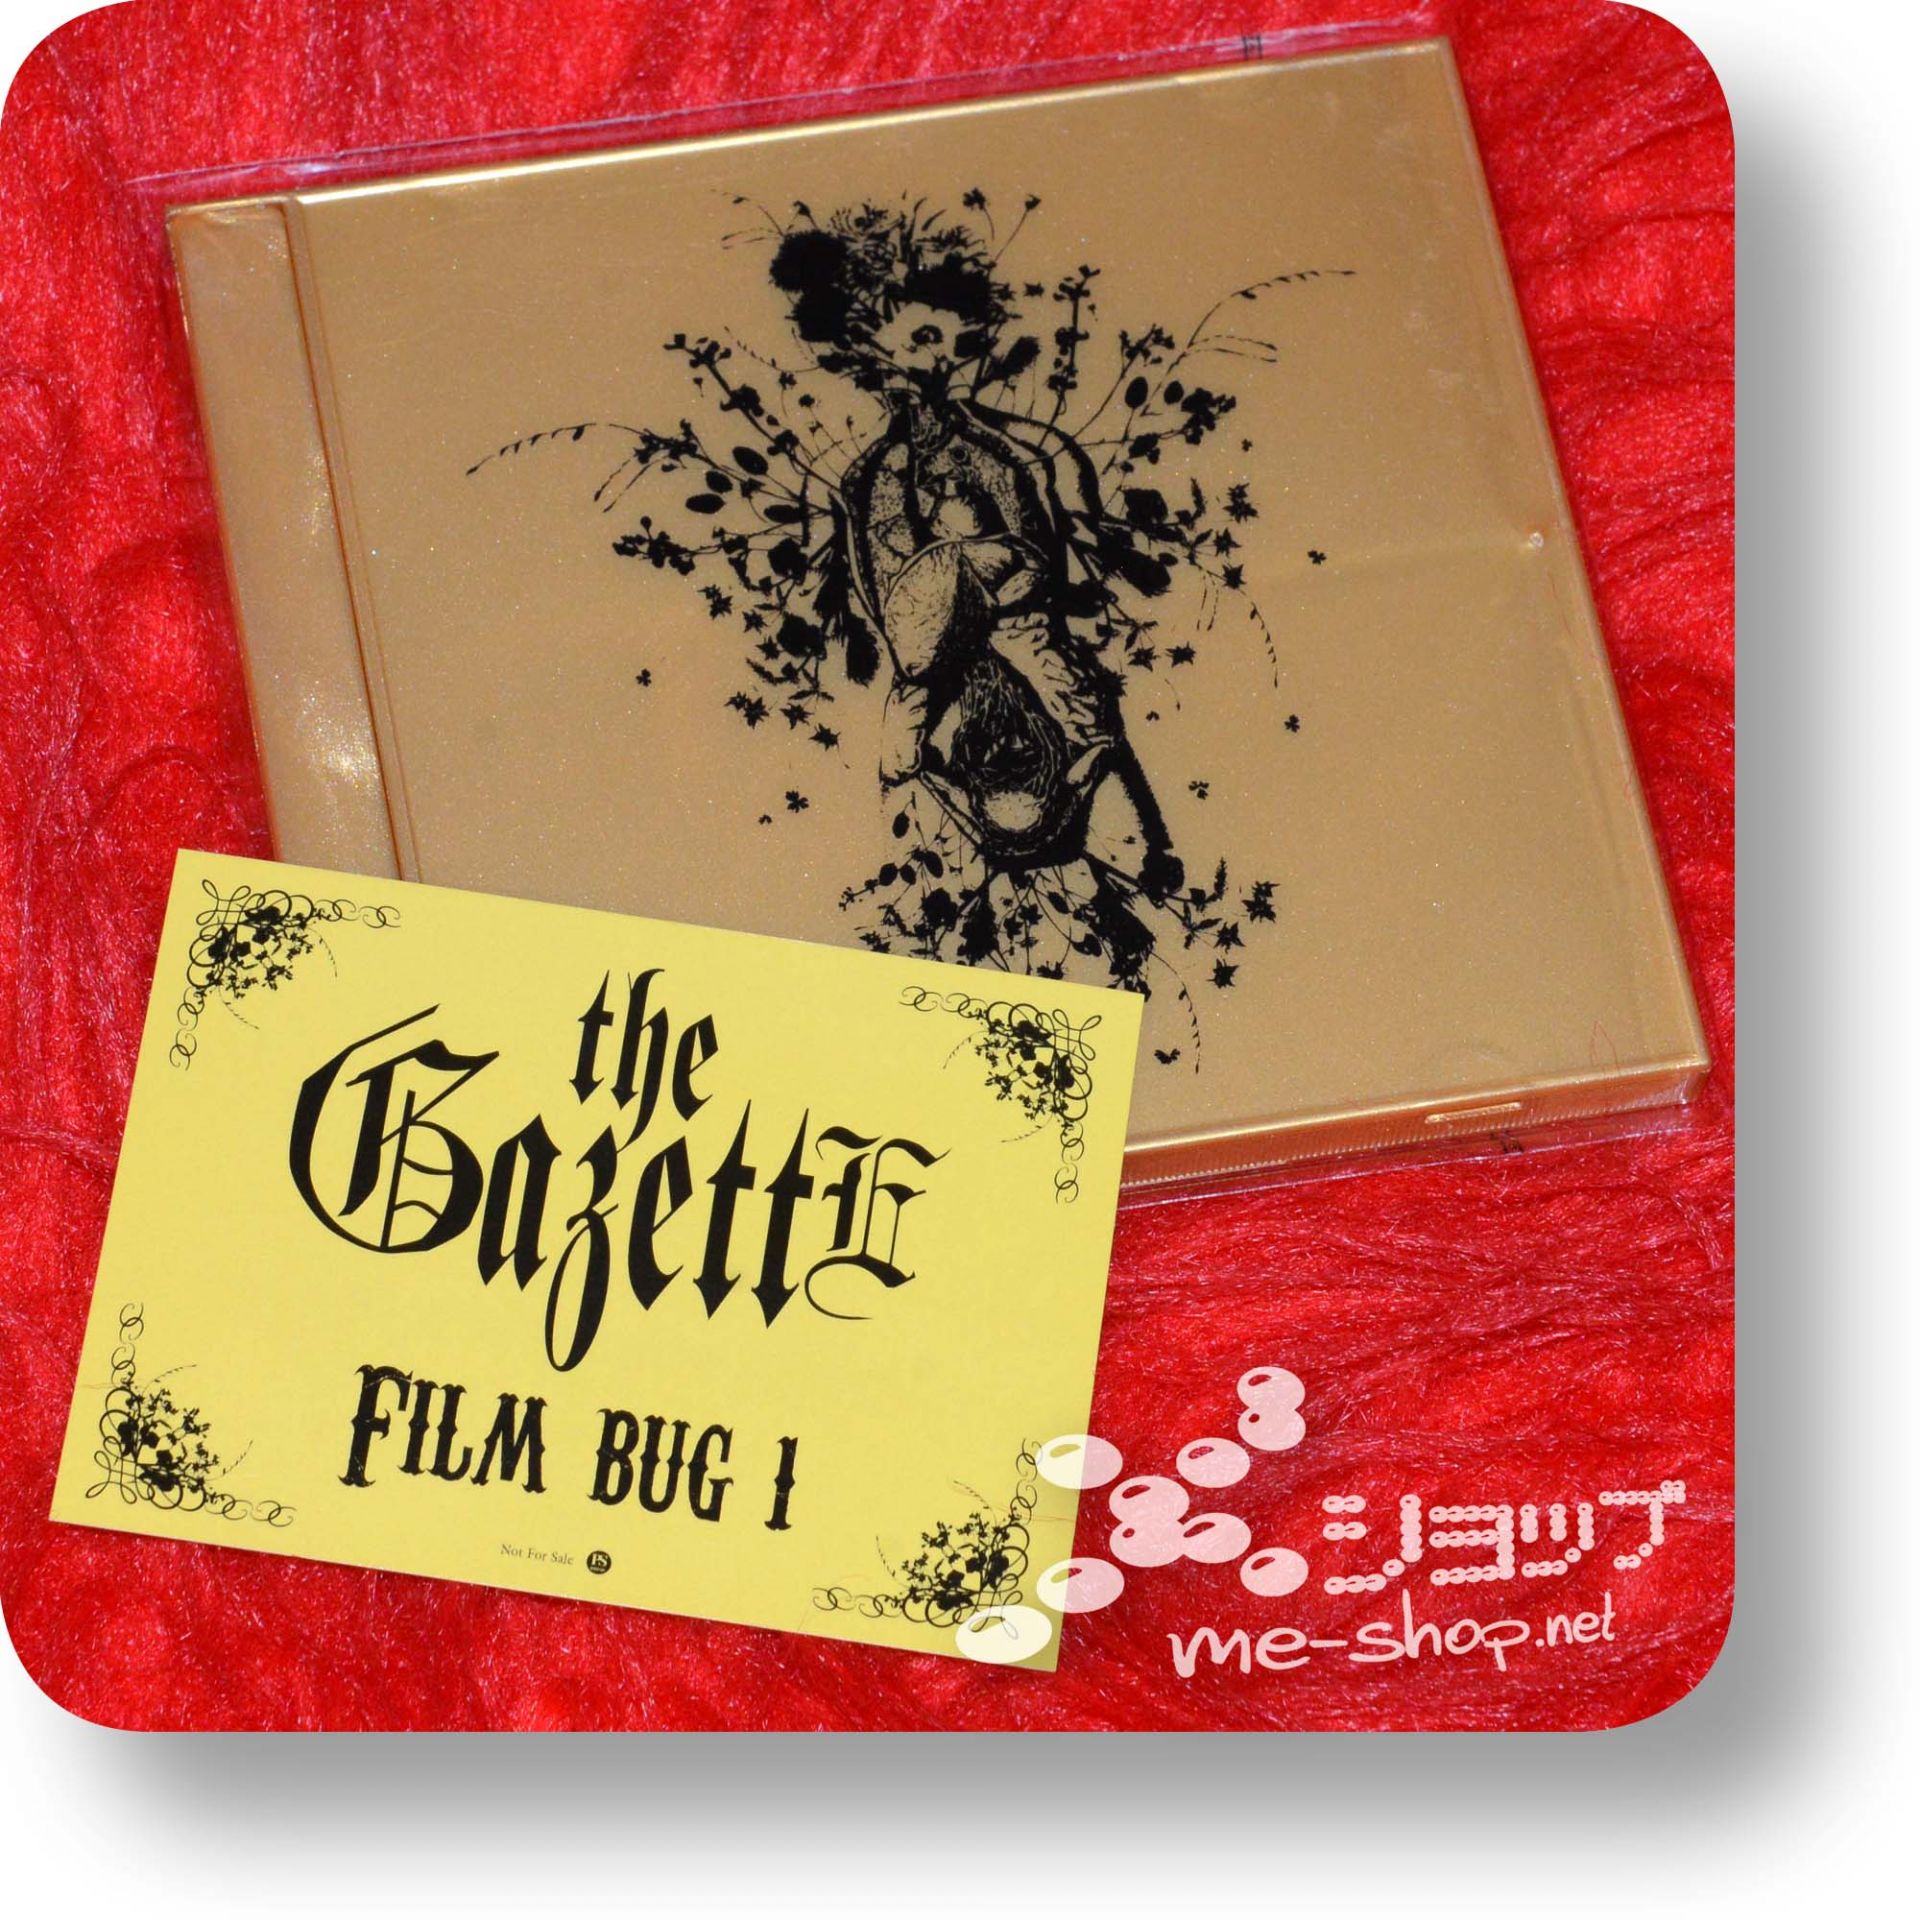 THE GAZETTE - Film Bug I (PV-DVD / 1.Press)+Bonus-Sticker! (Re!cycle)